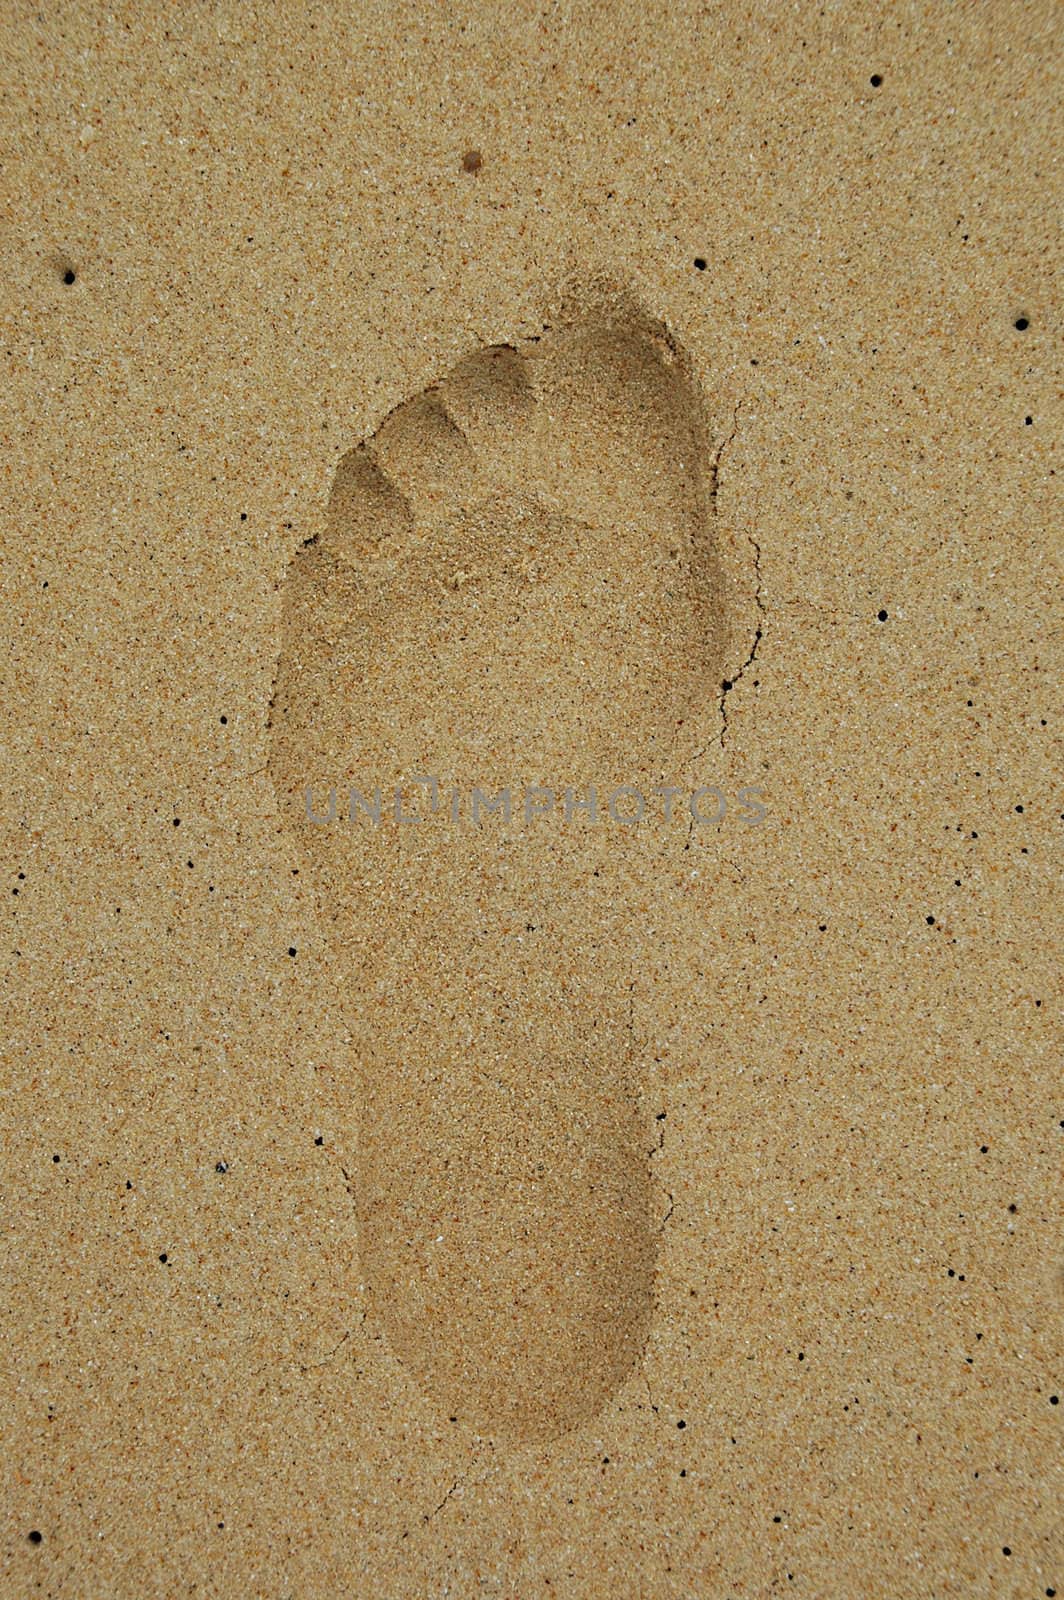 Footprint by cfoto